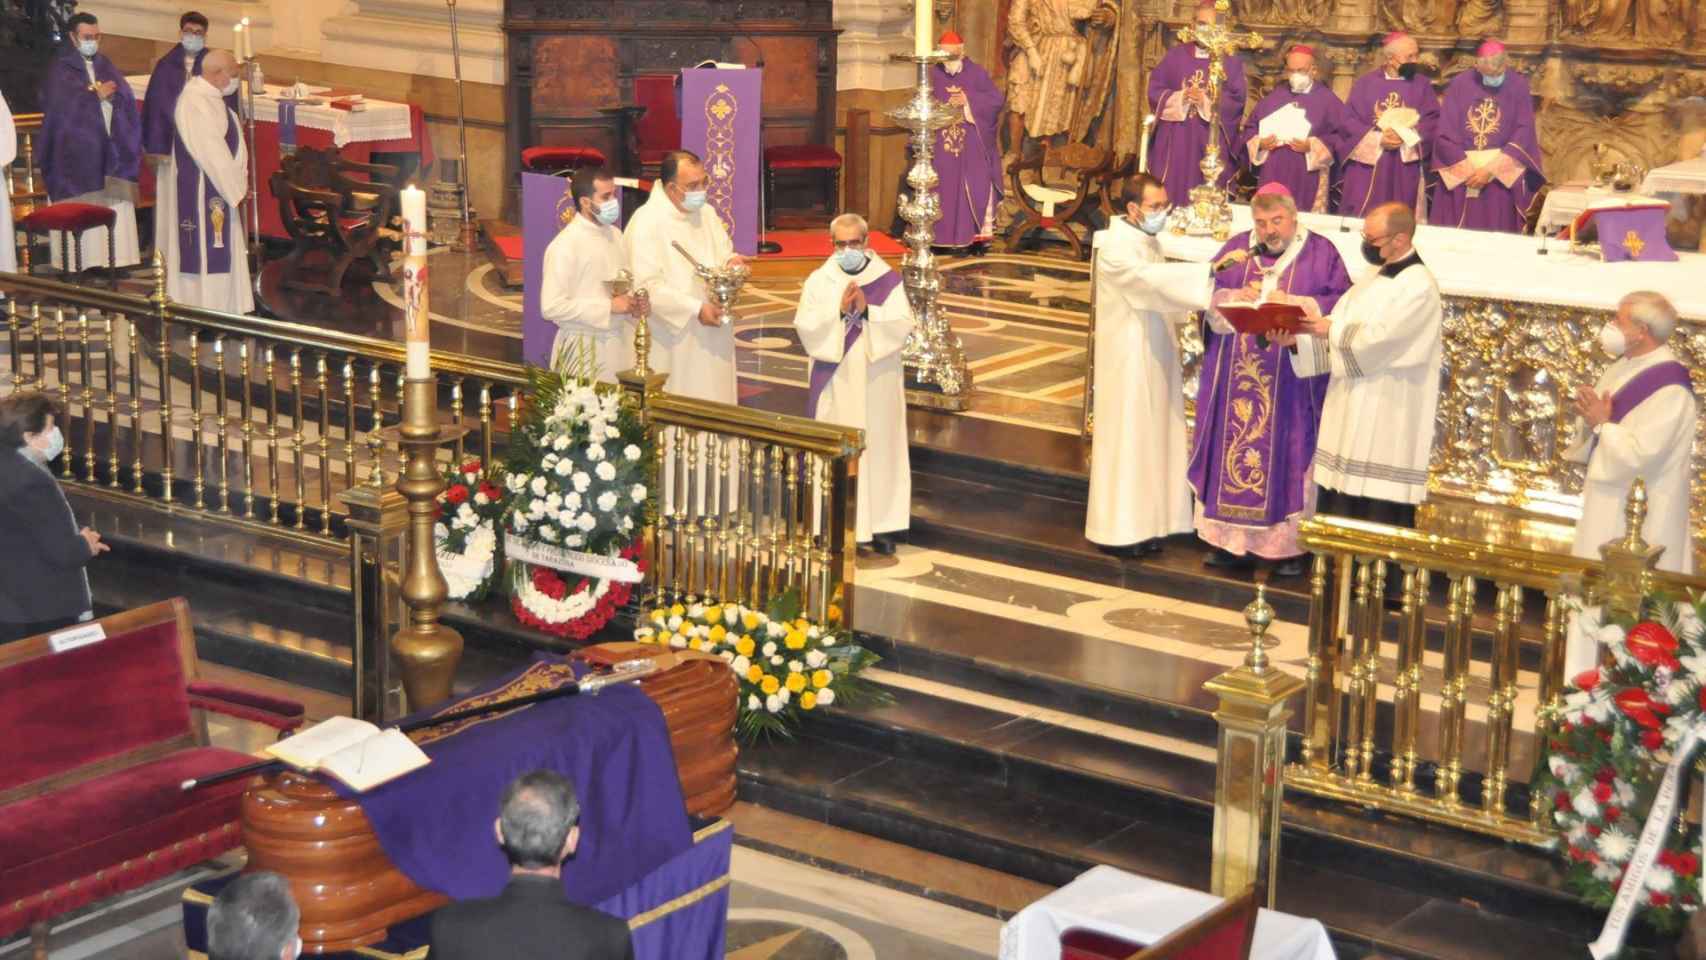 Misa funeral de monseñor Carmelo Borobia. Foto: Arzobispado de Zaragoza.